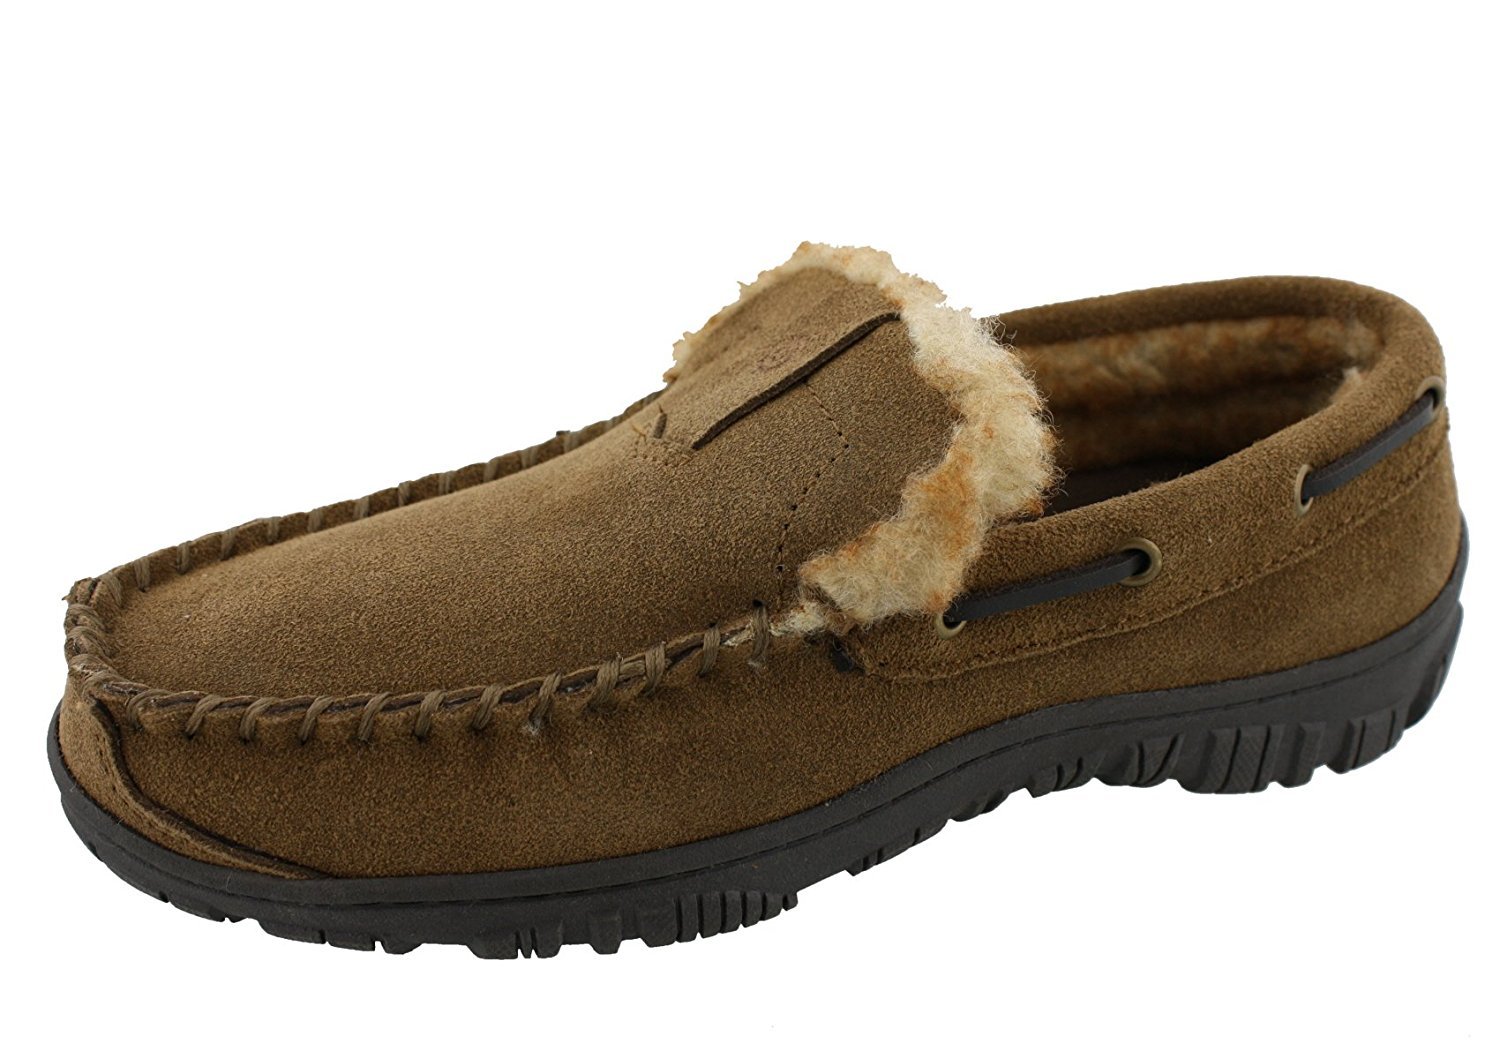 Clarks Men's Warren Slip On Loafer Brown Suede Fur Lined Casual Shoes ...